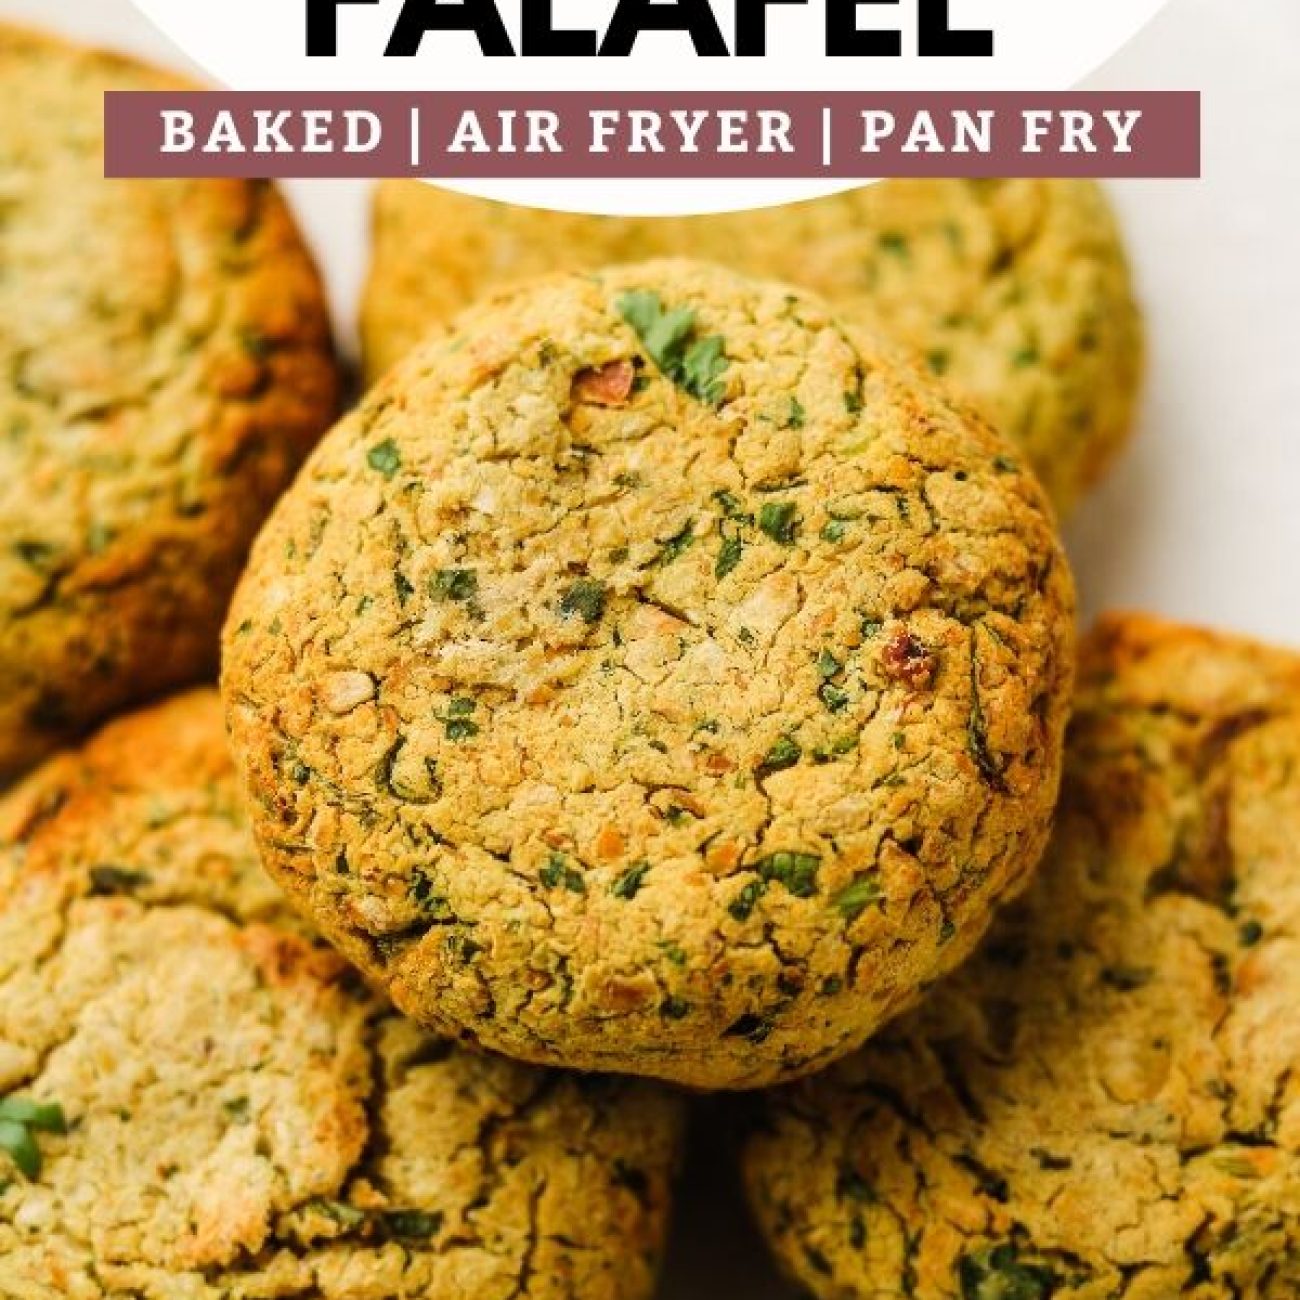 Crunchy Gluten-Free Falafel Recipe by Wicklewoods